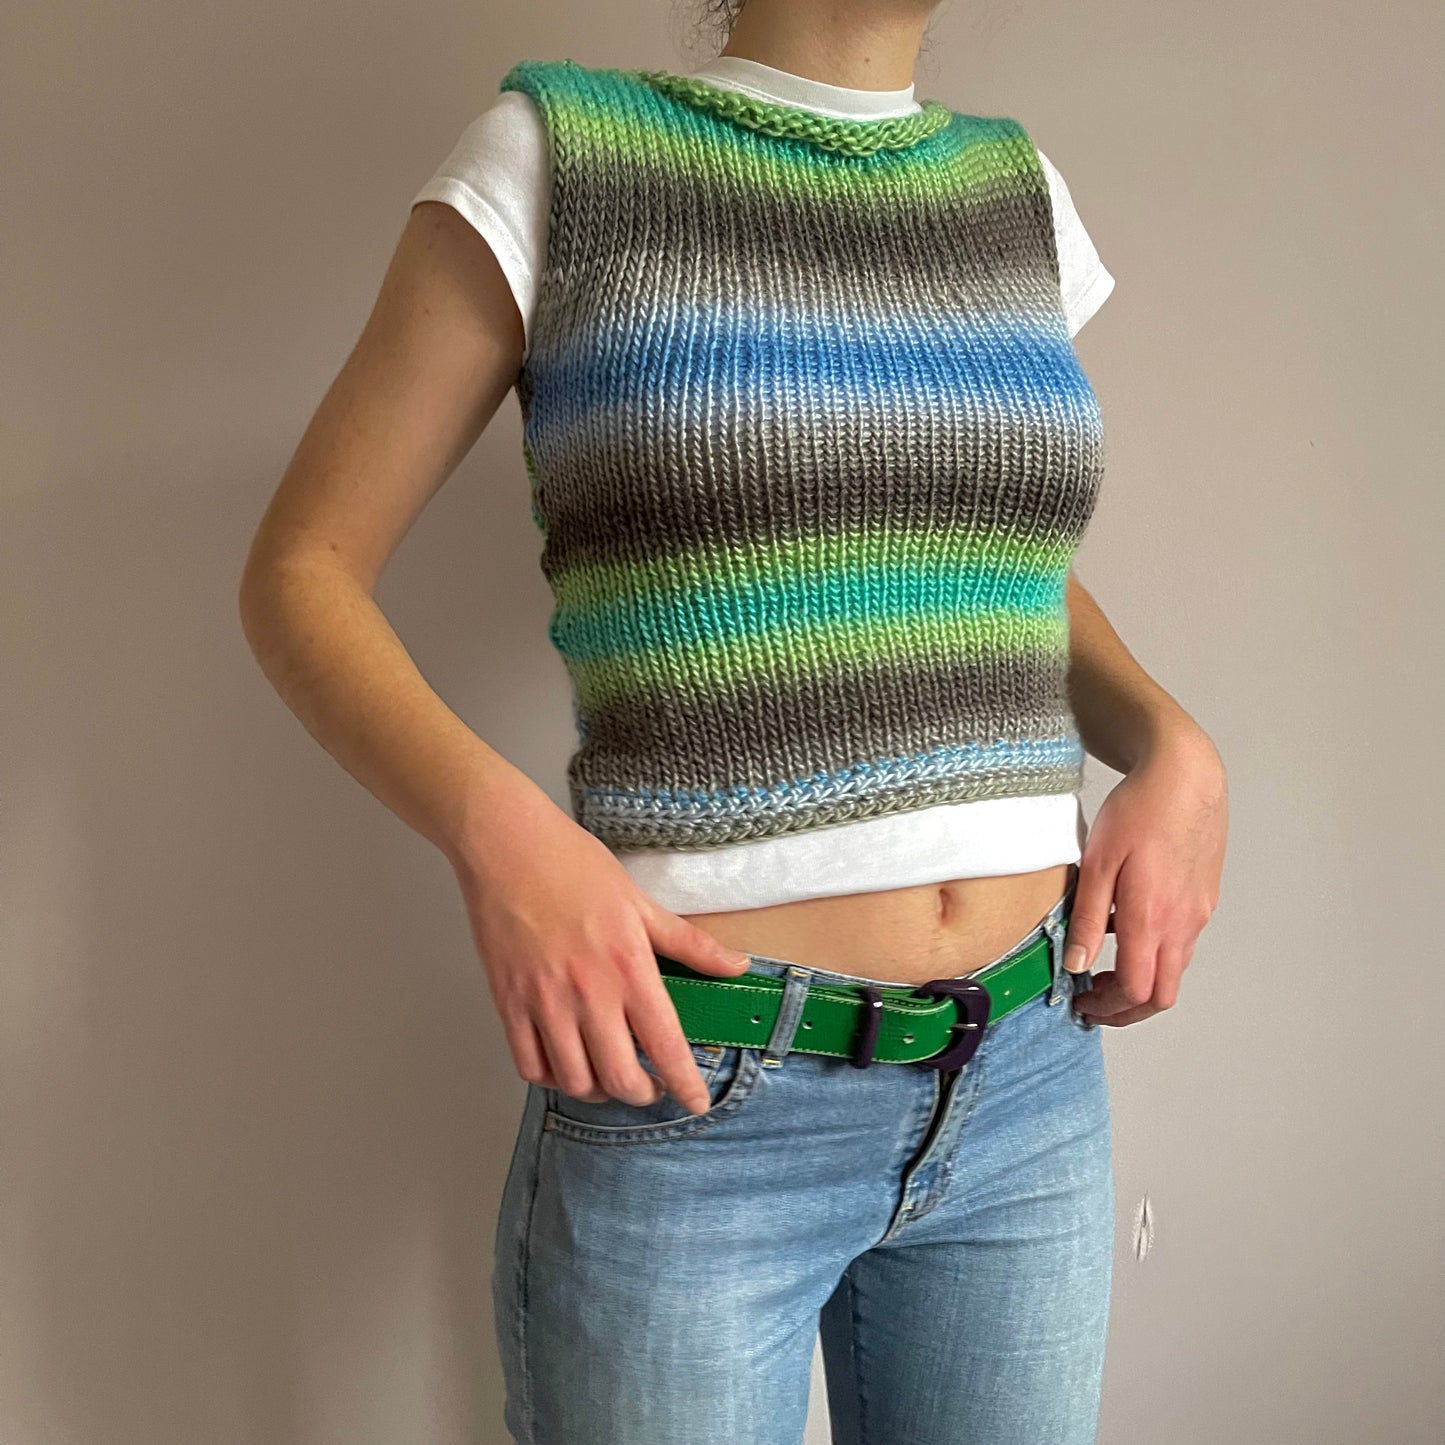 The Ocean Shades Vest - handmade knitted sweater vest